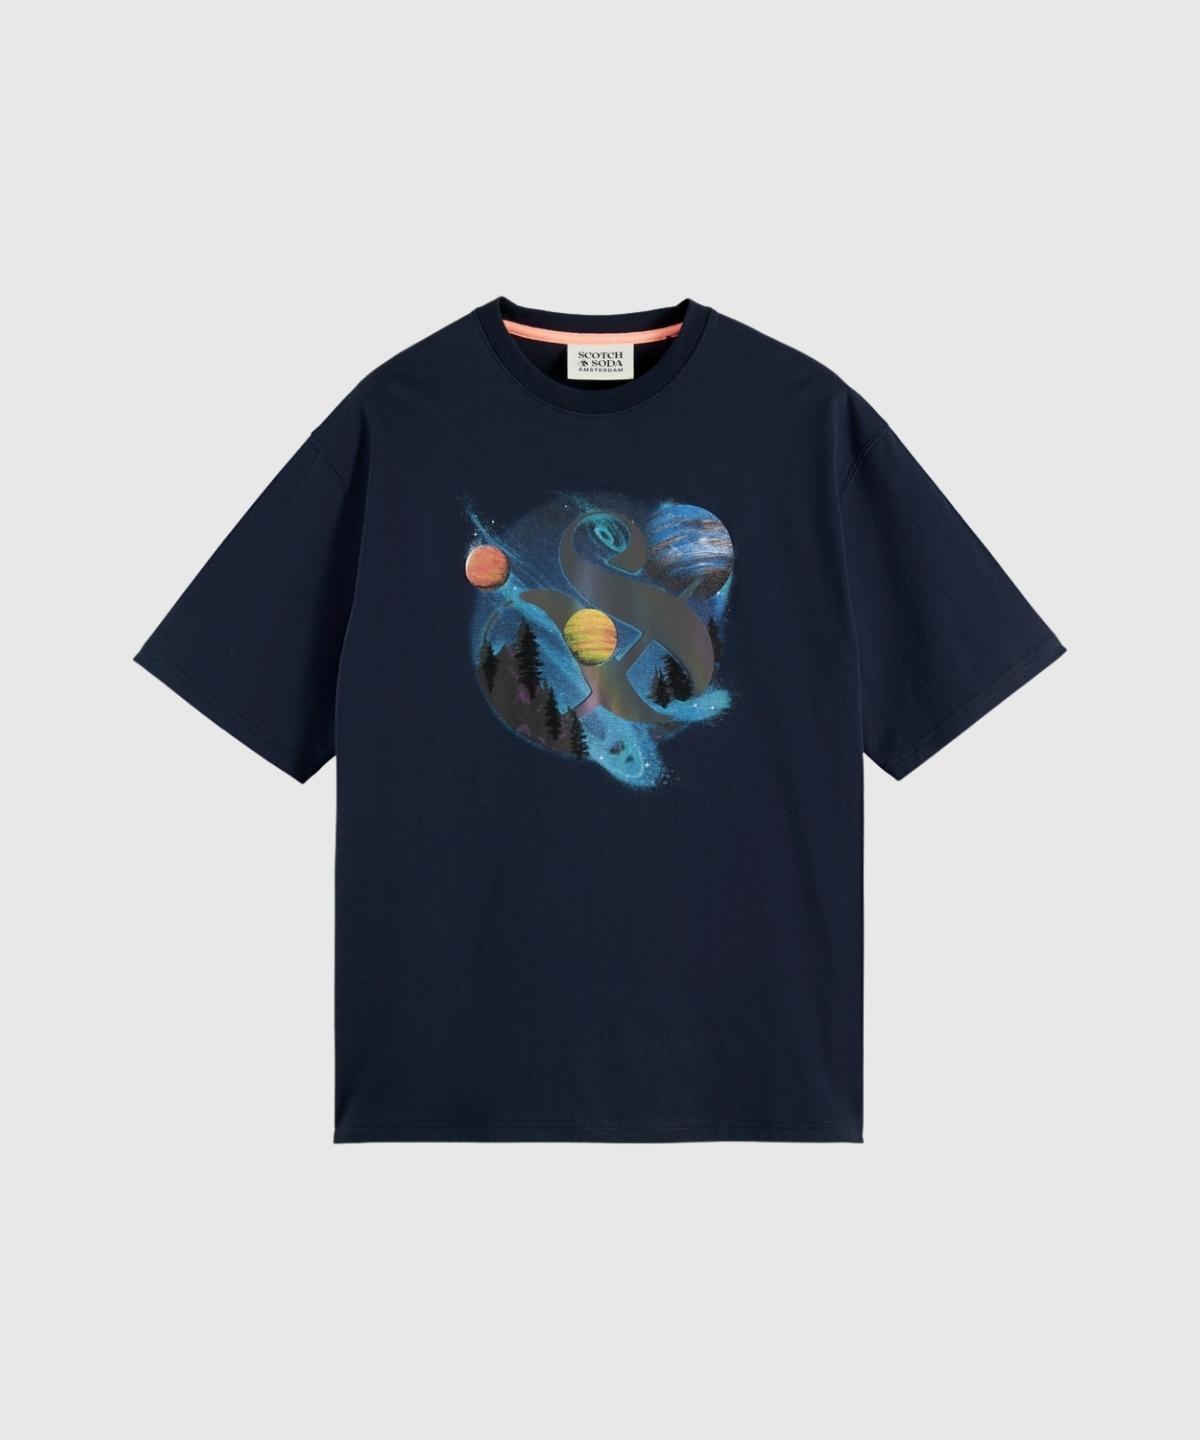 Space artwork t-shirt